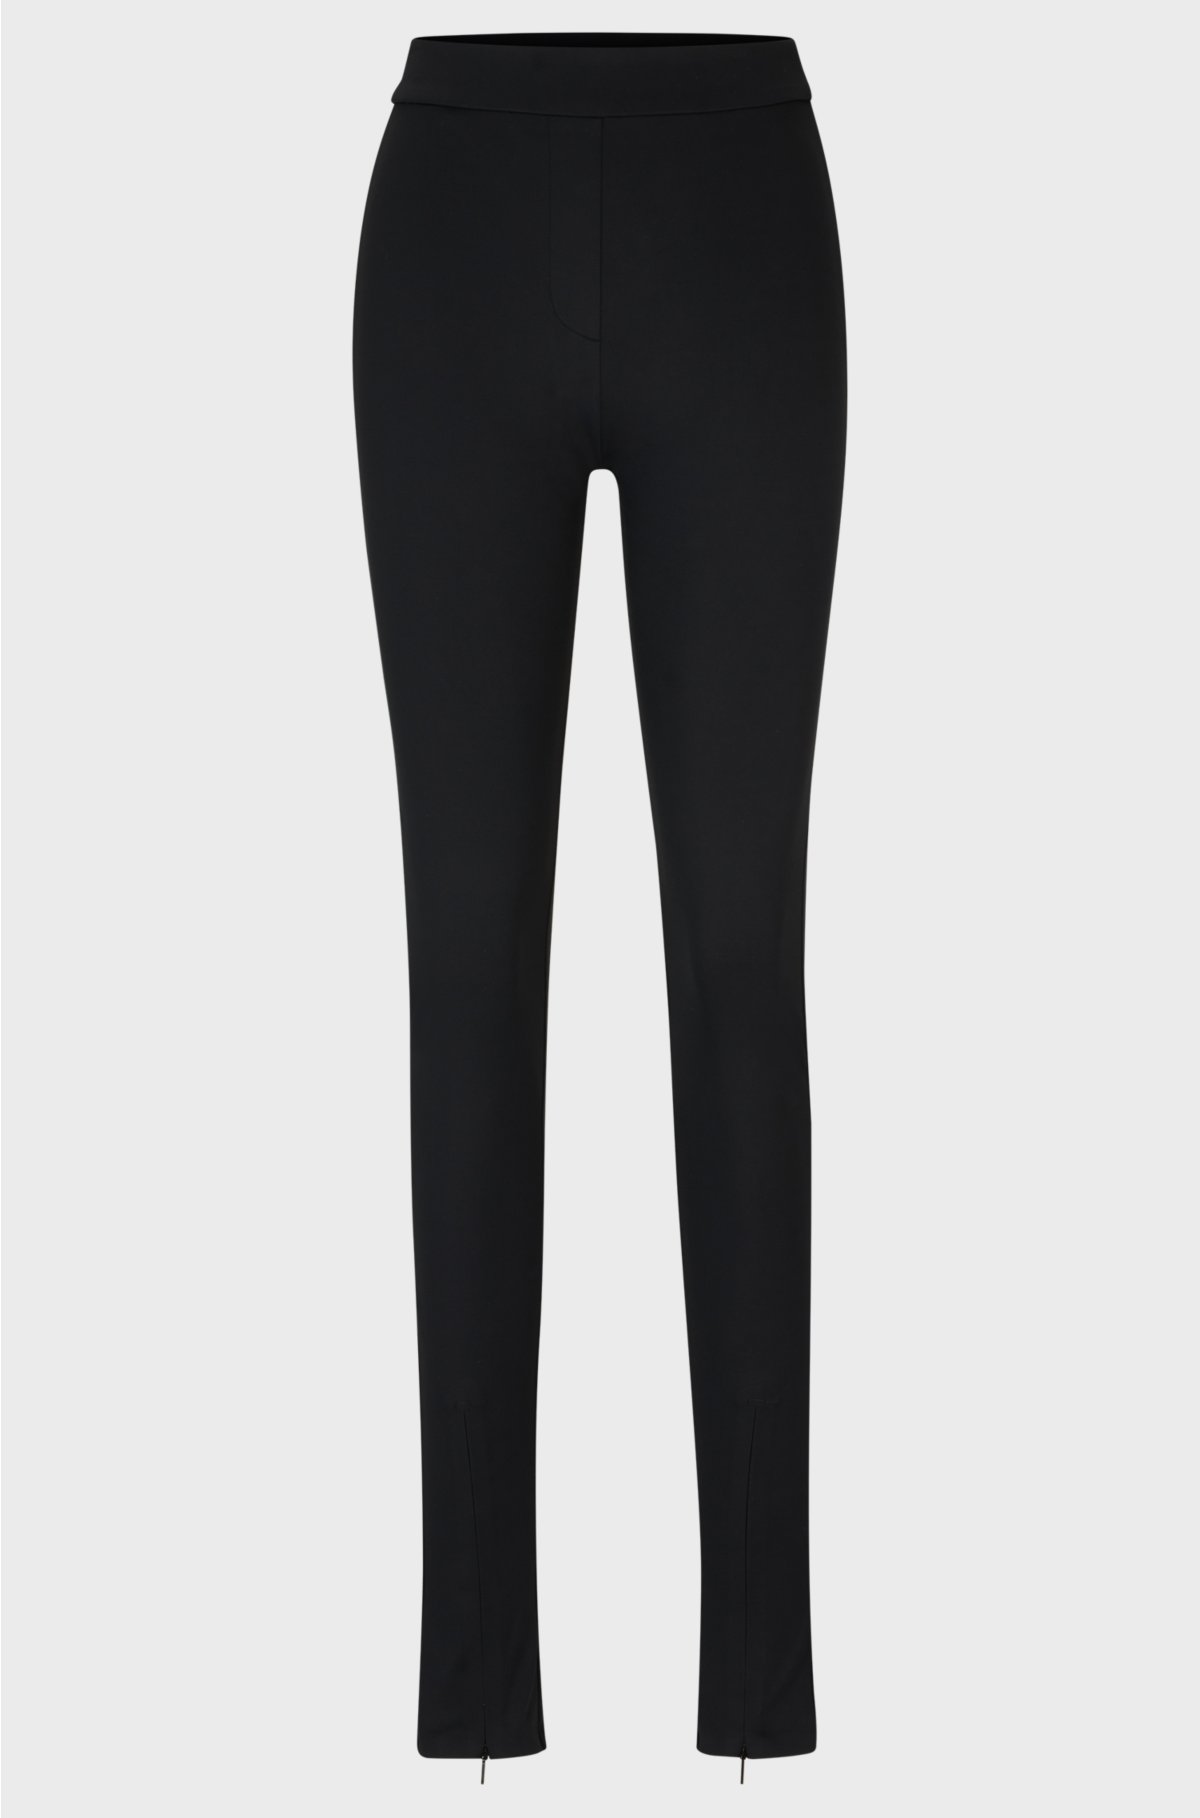 NAOMI x BOSS leggings in stretch jersey with zip hems, Black